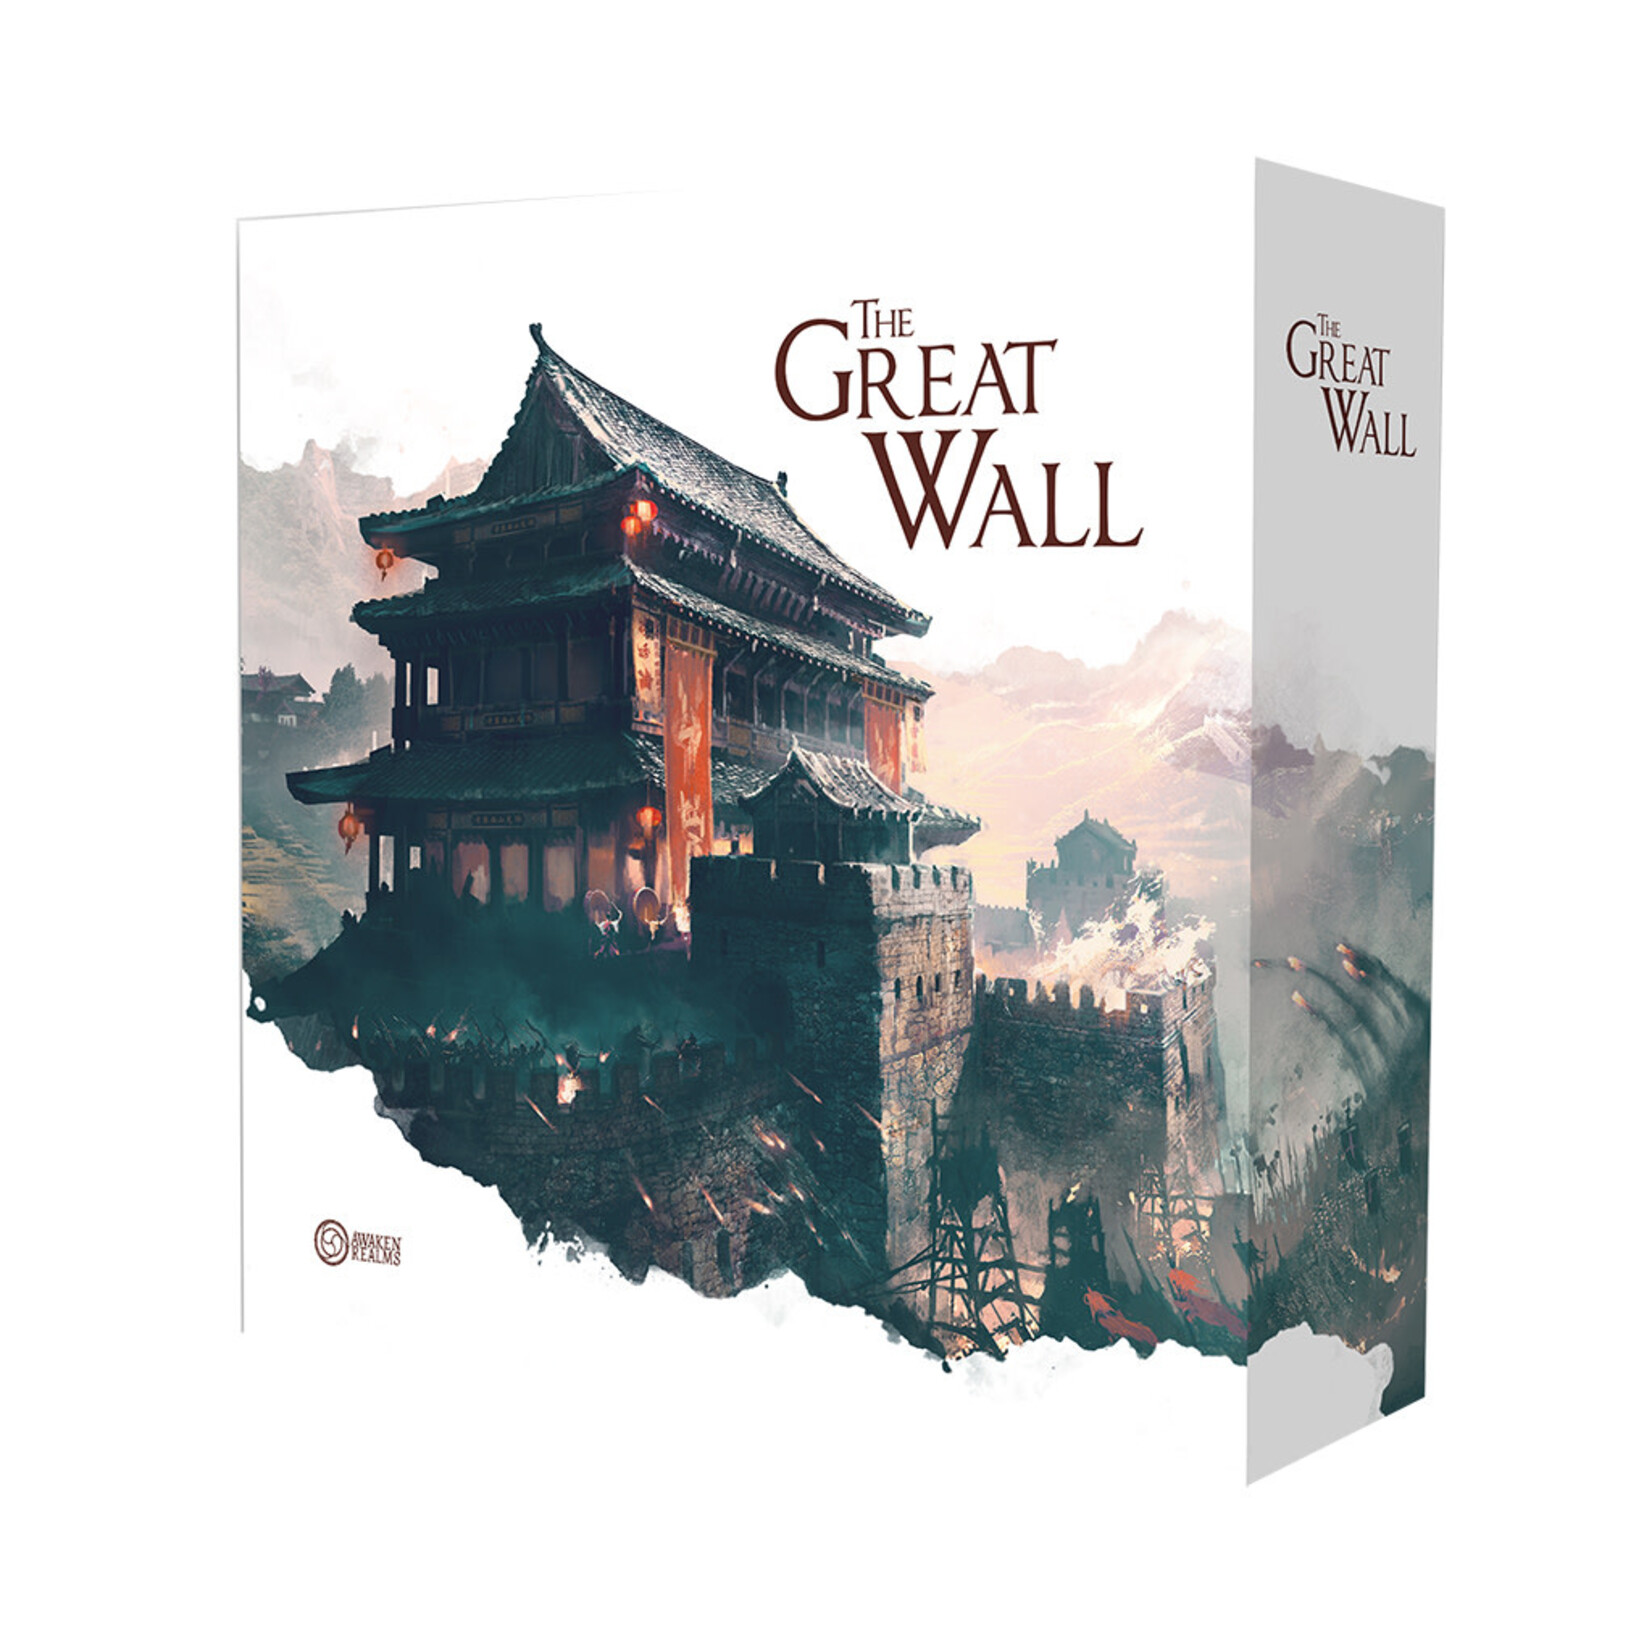 Awaken Realms The Great Wall